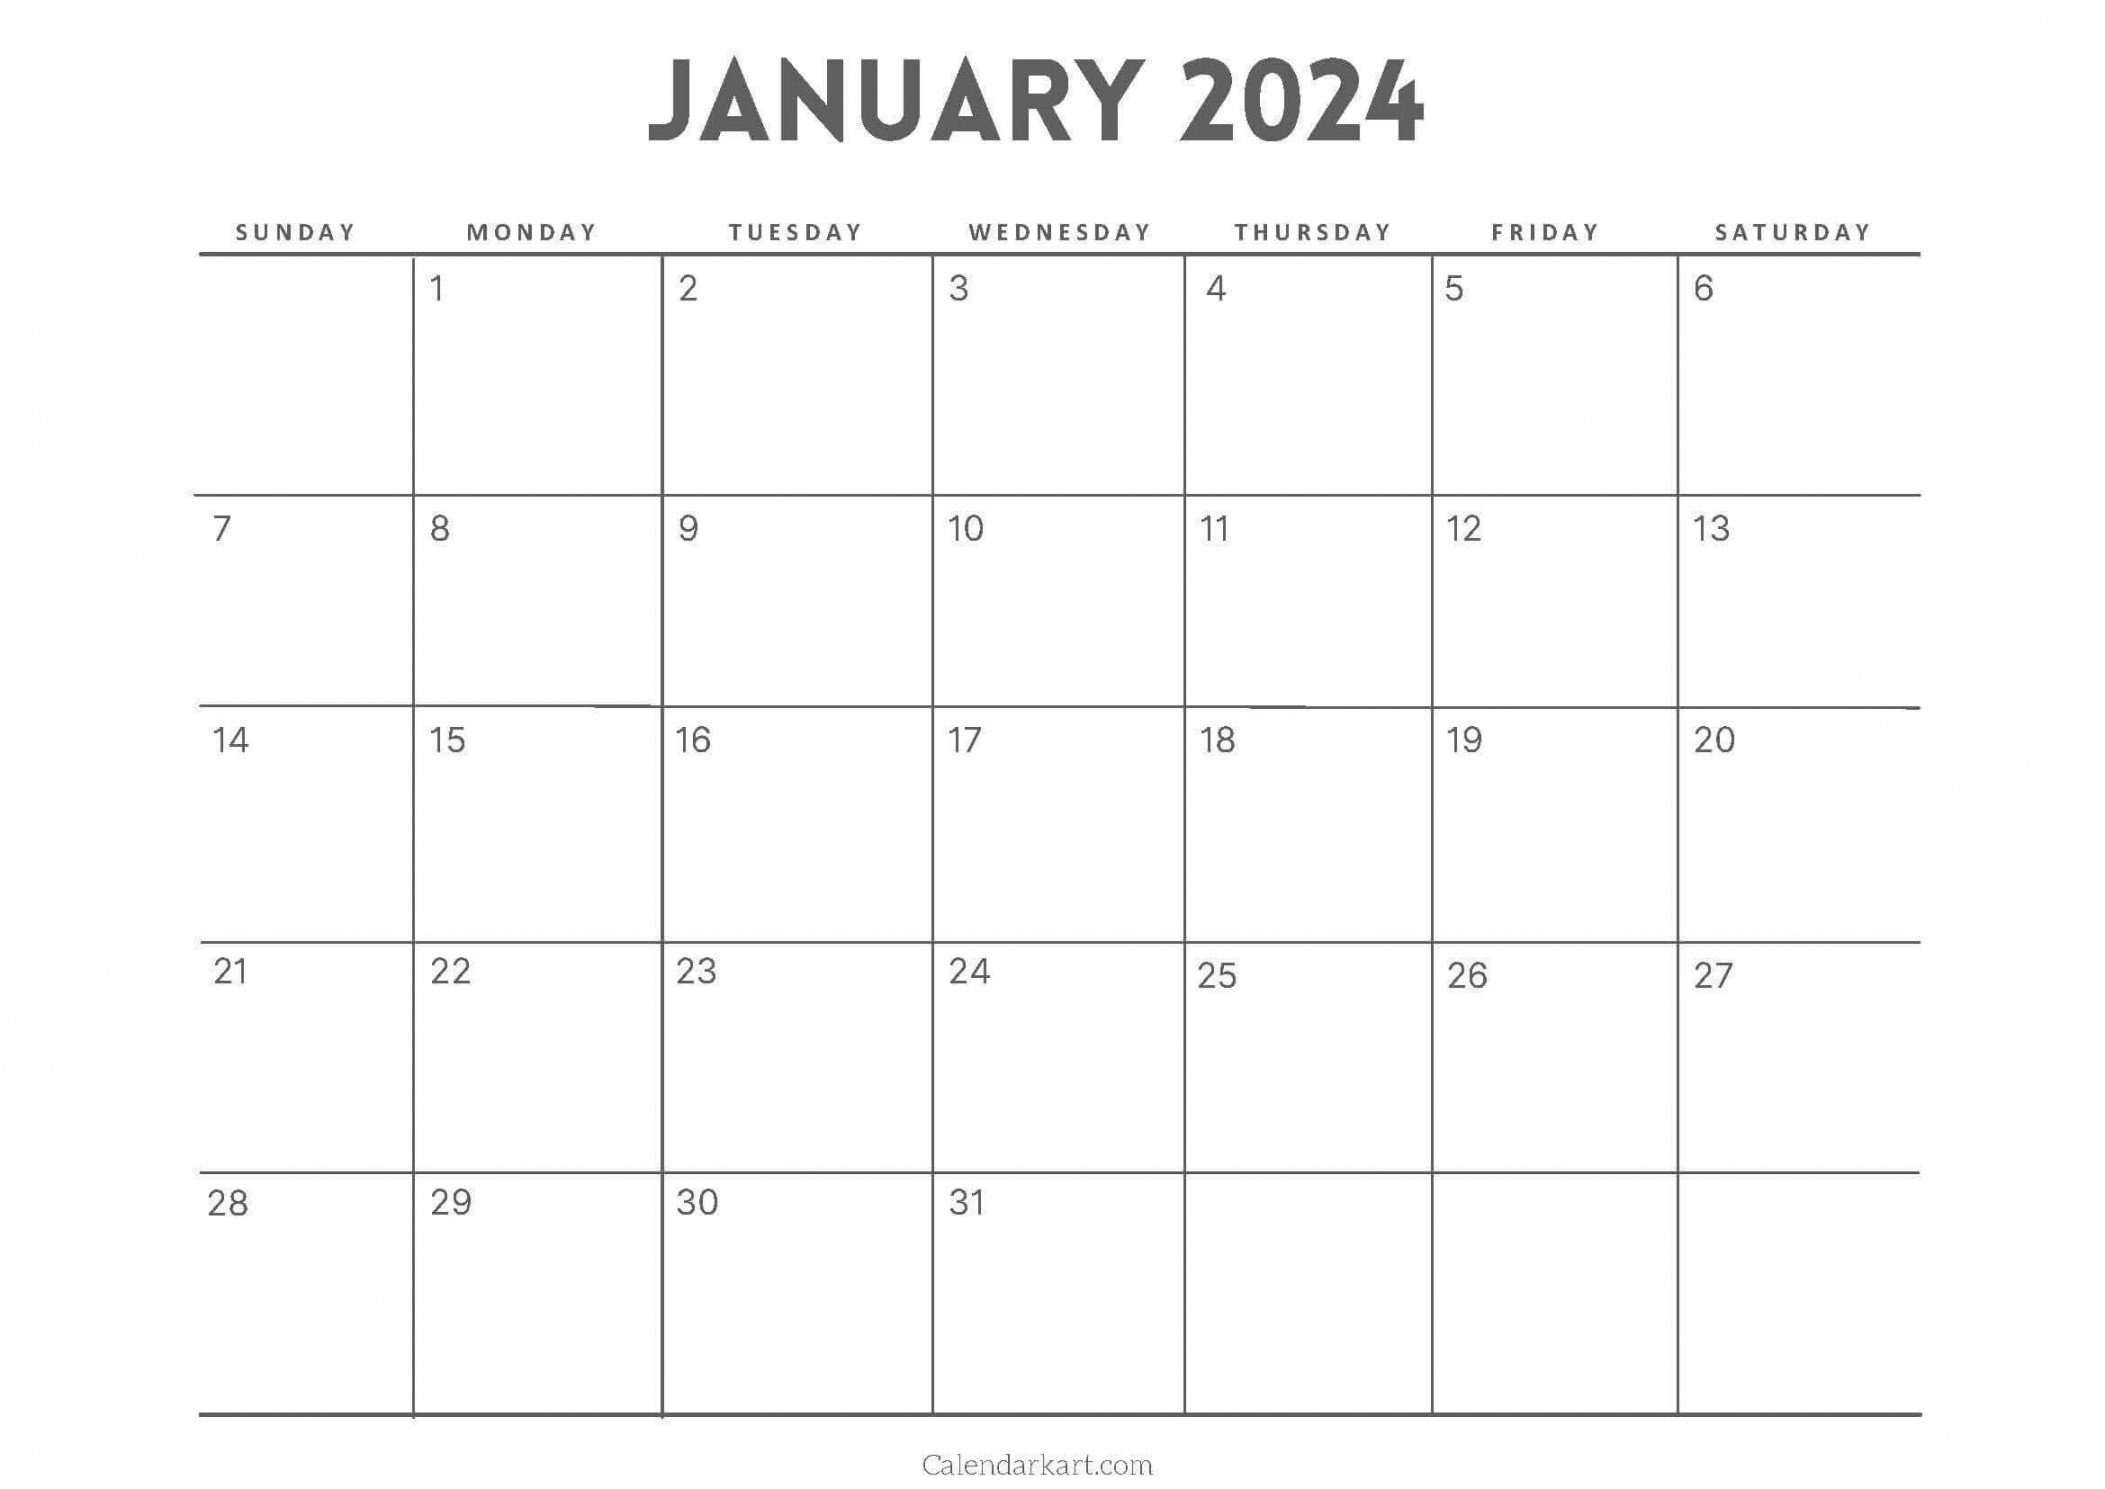 Free Printable January Calendars - CalendarKart